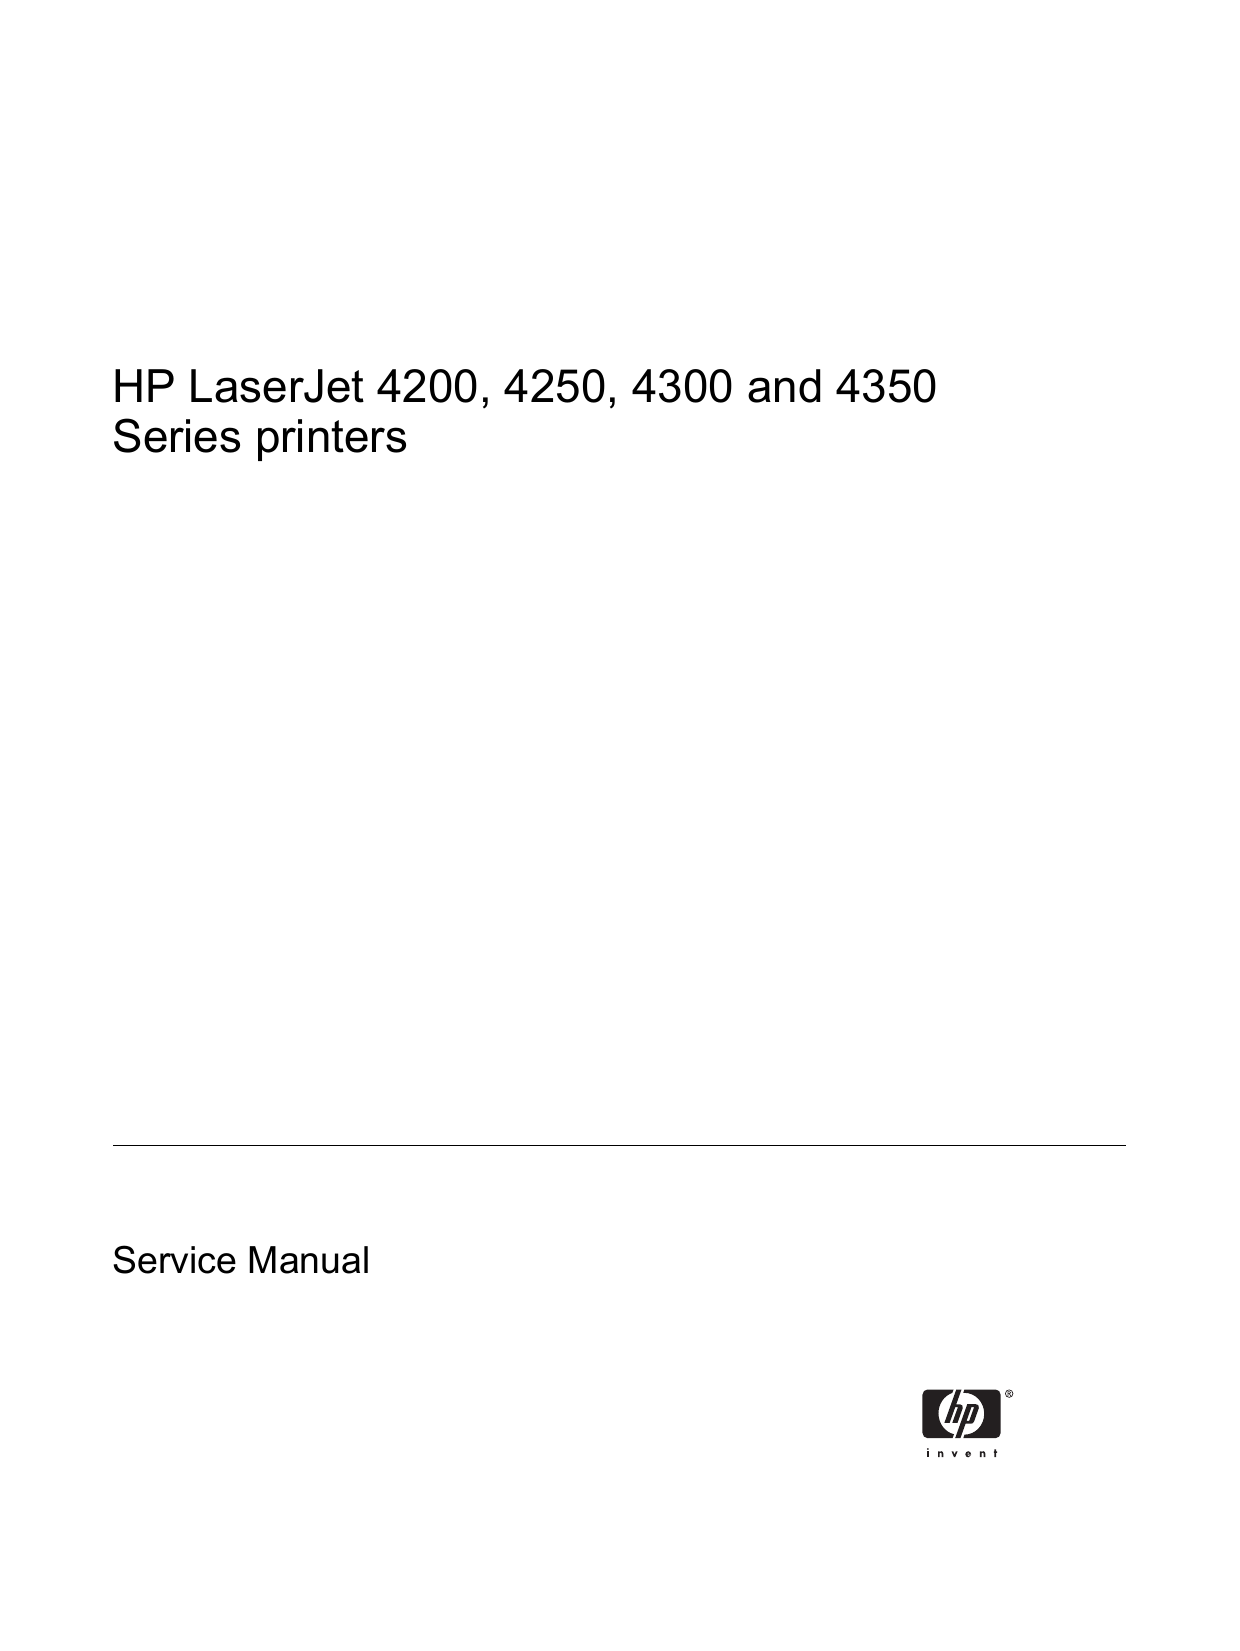 HP LaserJet 4200, 4250, 4300, 4350 monochrome laser printer service guide Preview image 3